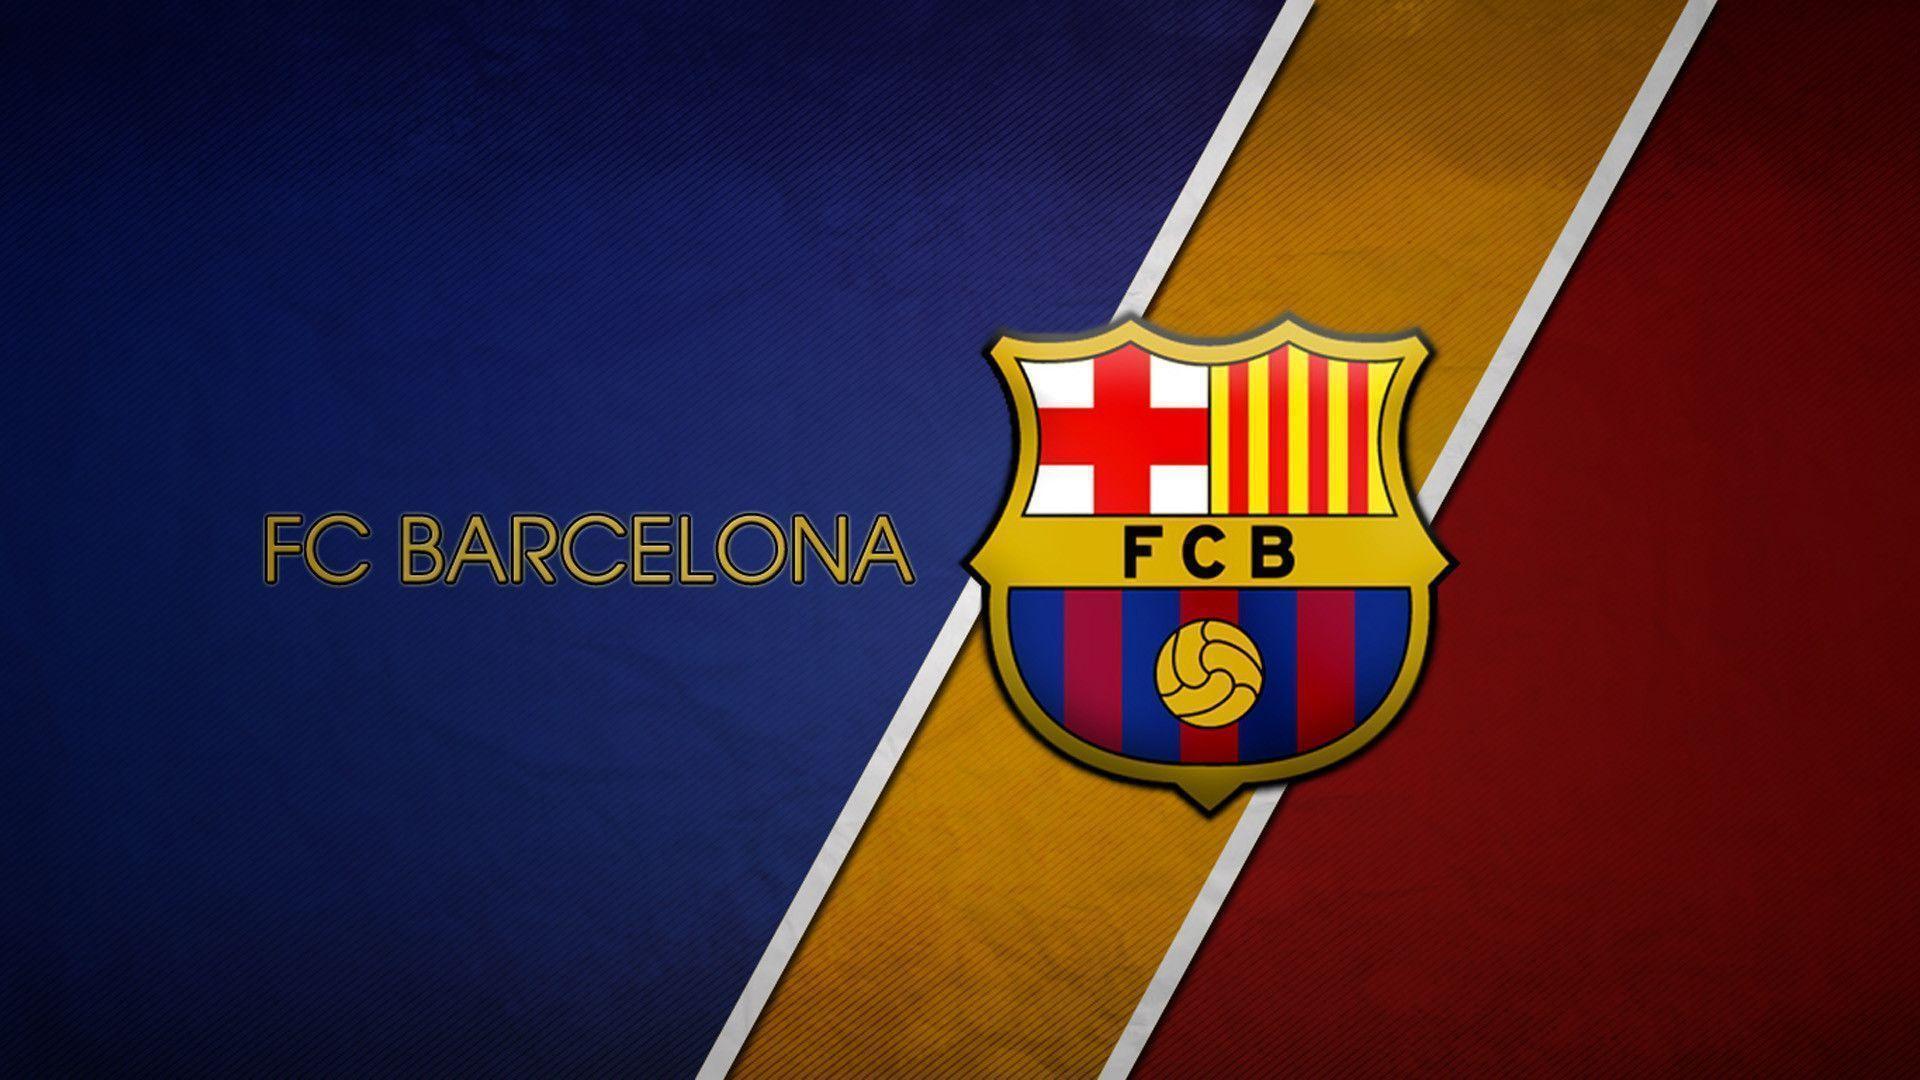 FC Barcelona One of the Greatest Football Team